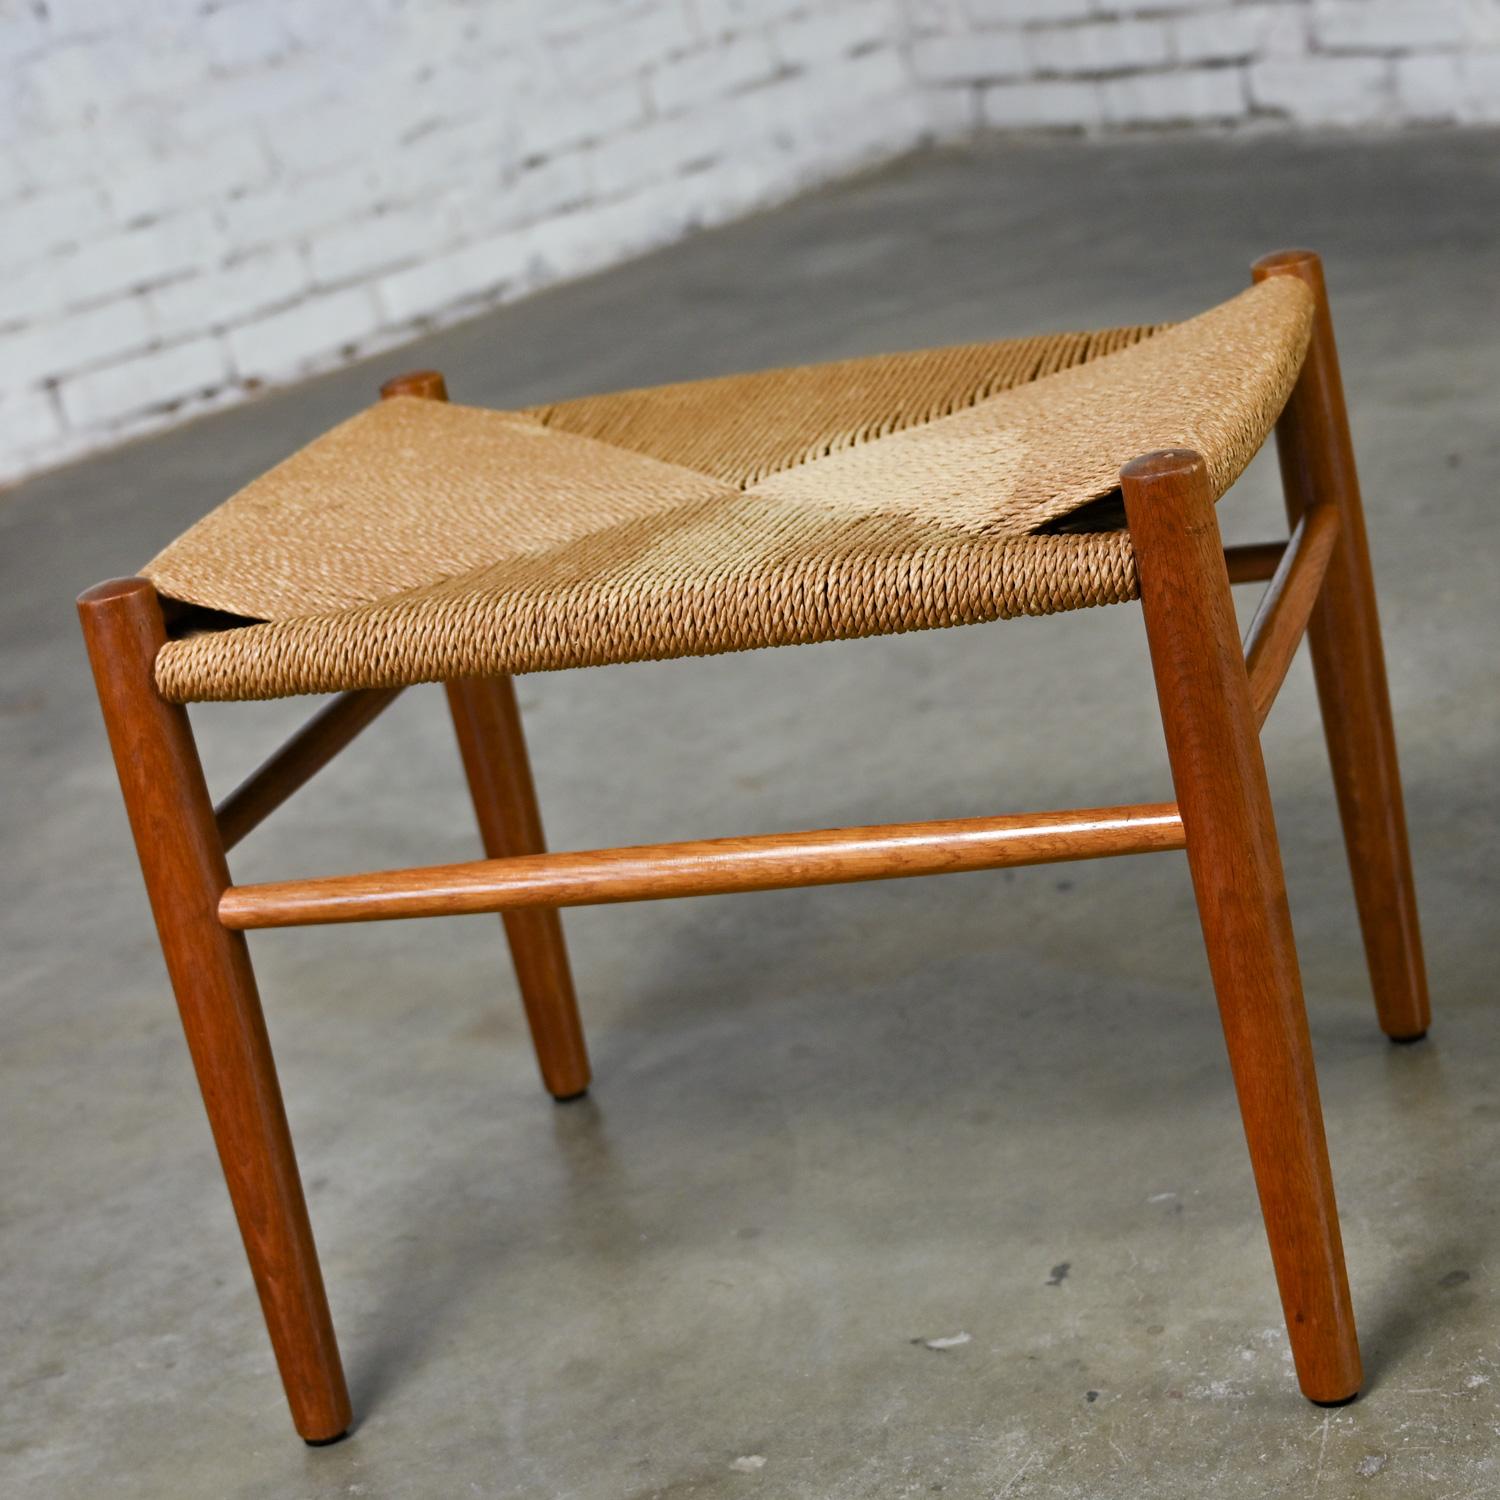 Danish Mid-20th Century Scandinavian Modern Low Stool Teak with Natural Paper Cord Seat